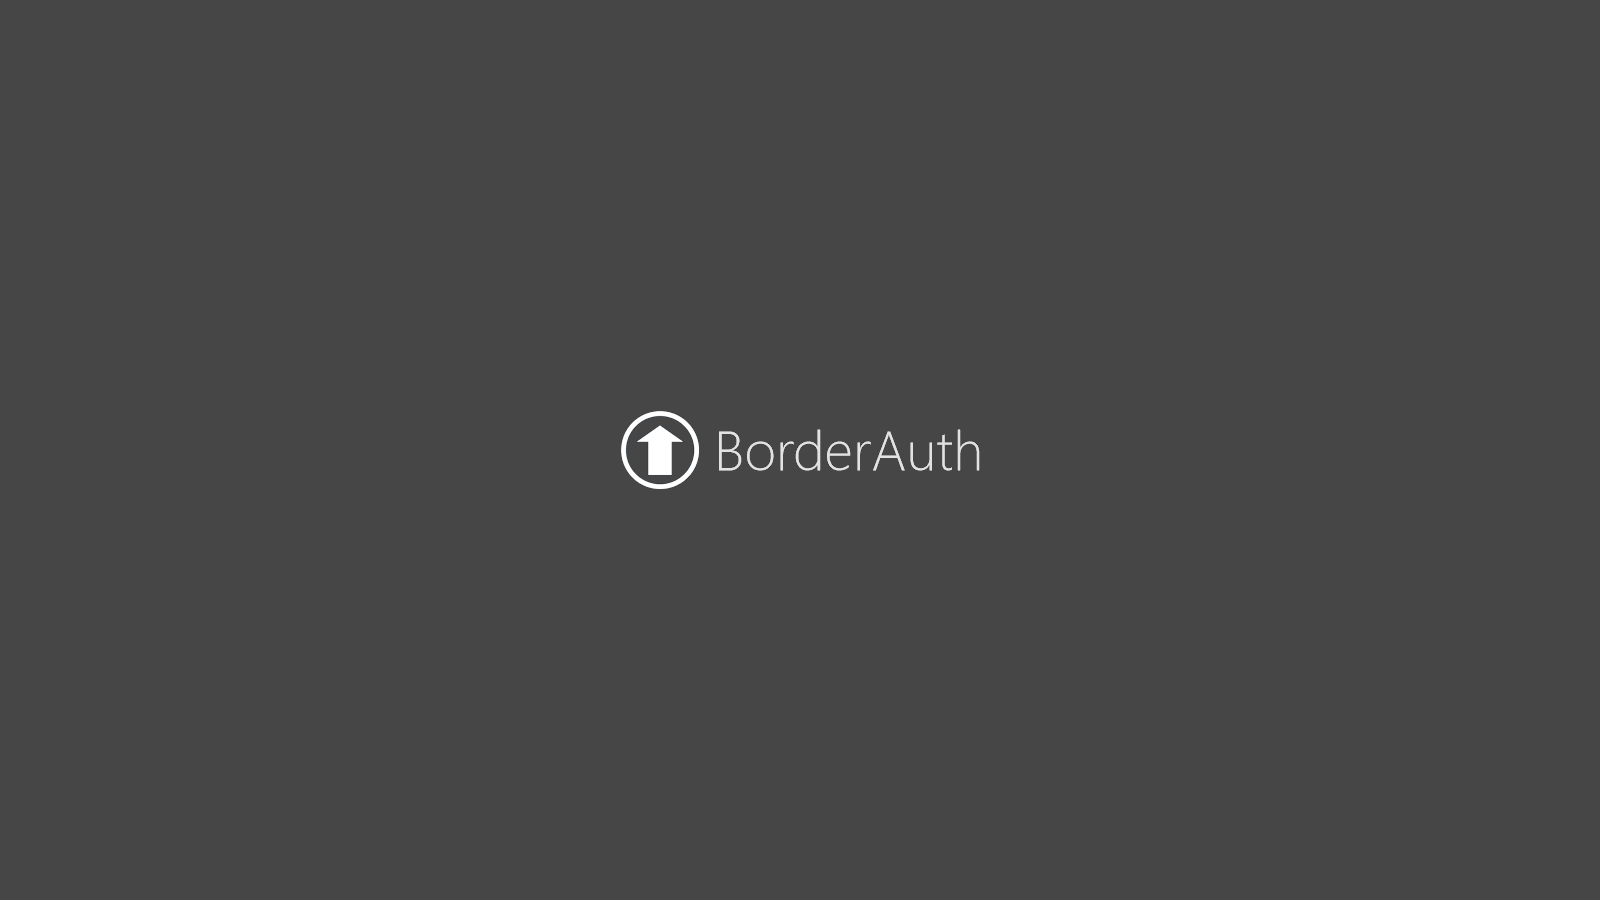 BorderAuth splashscreen